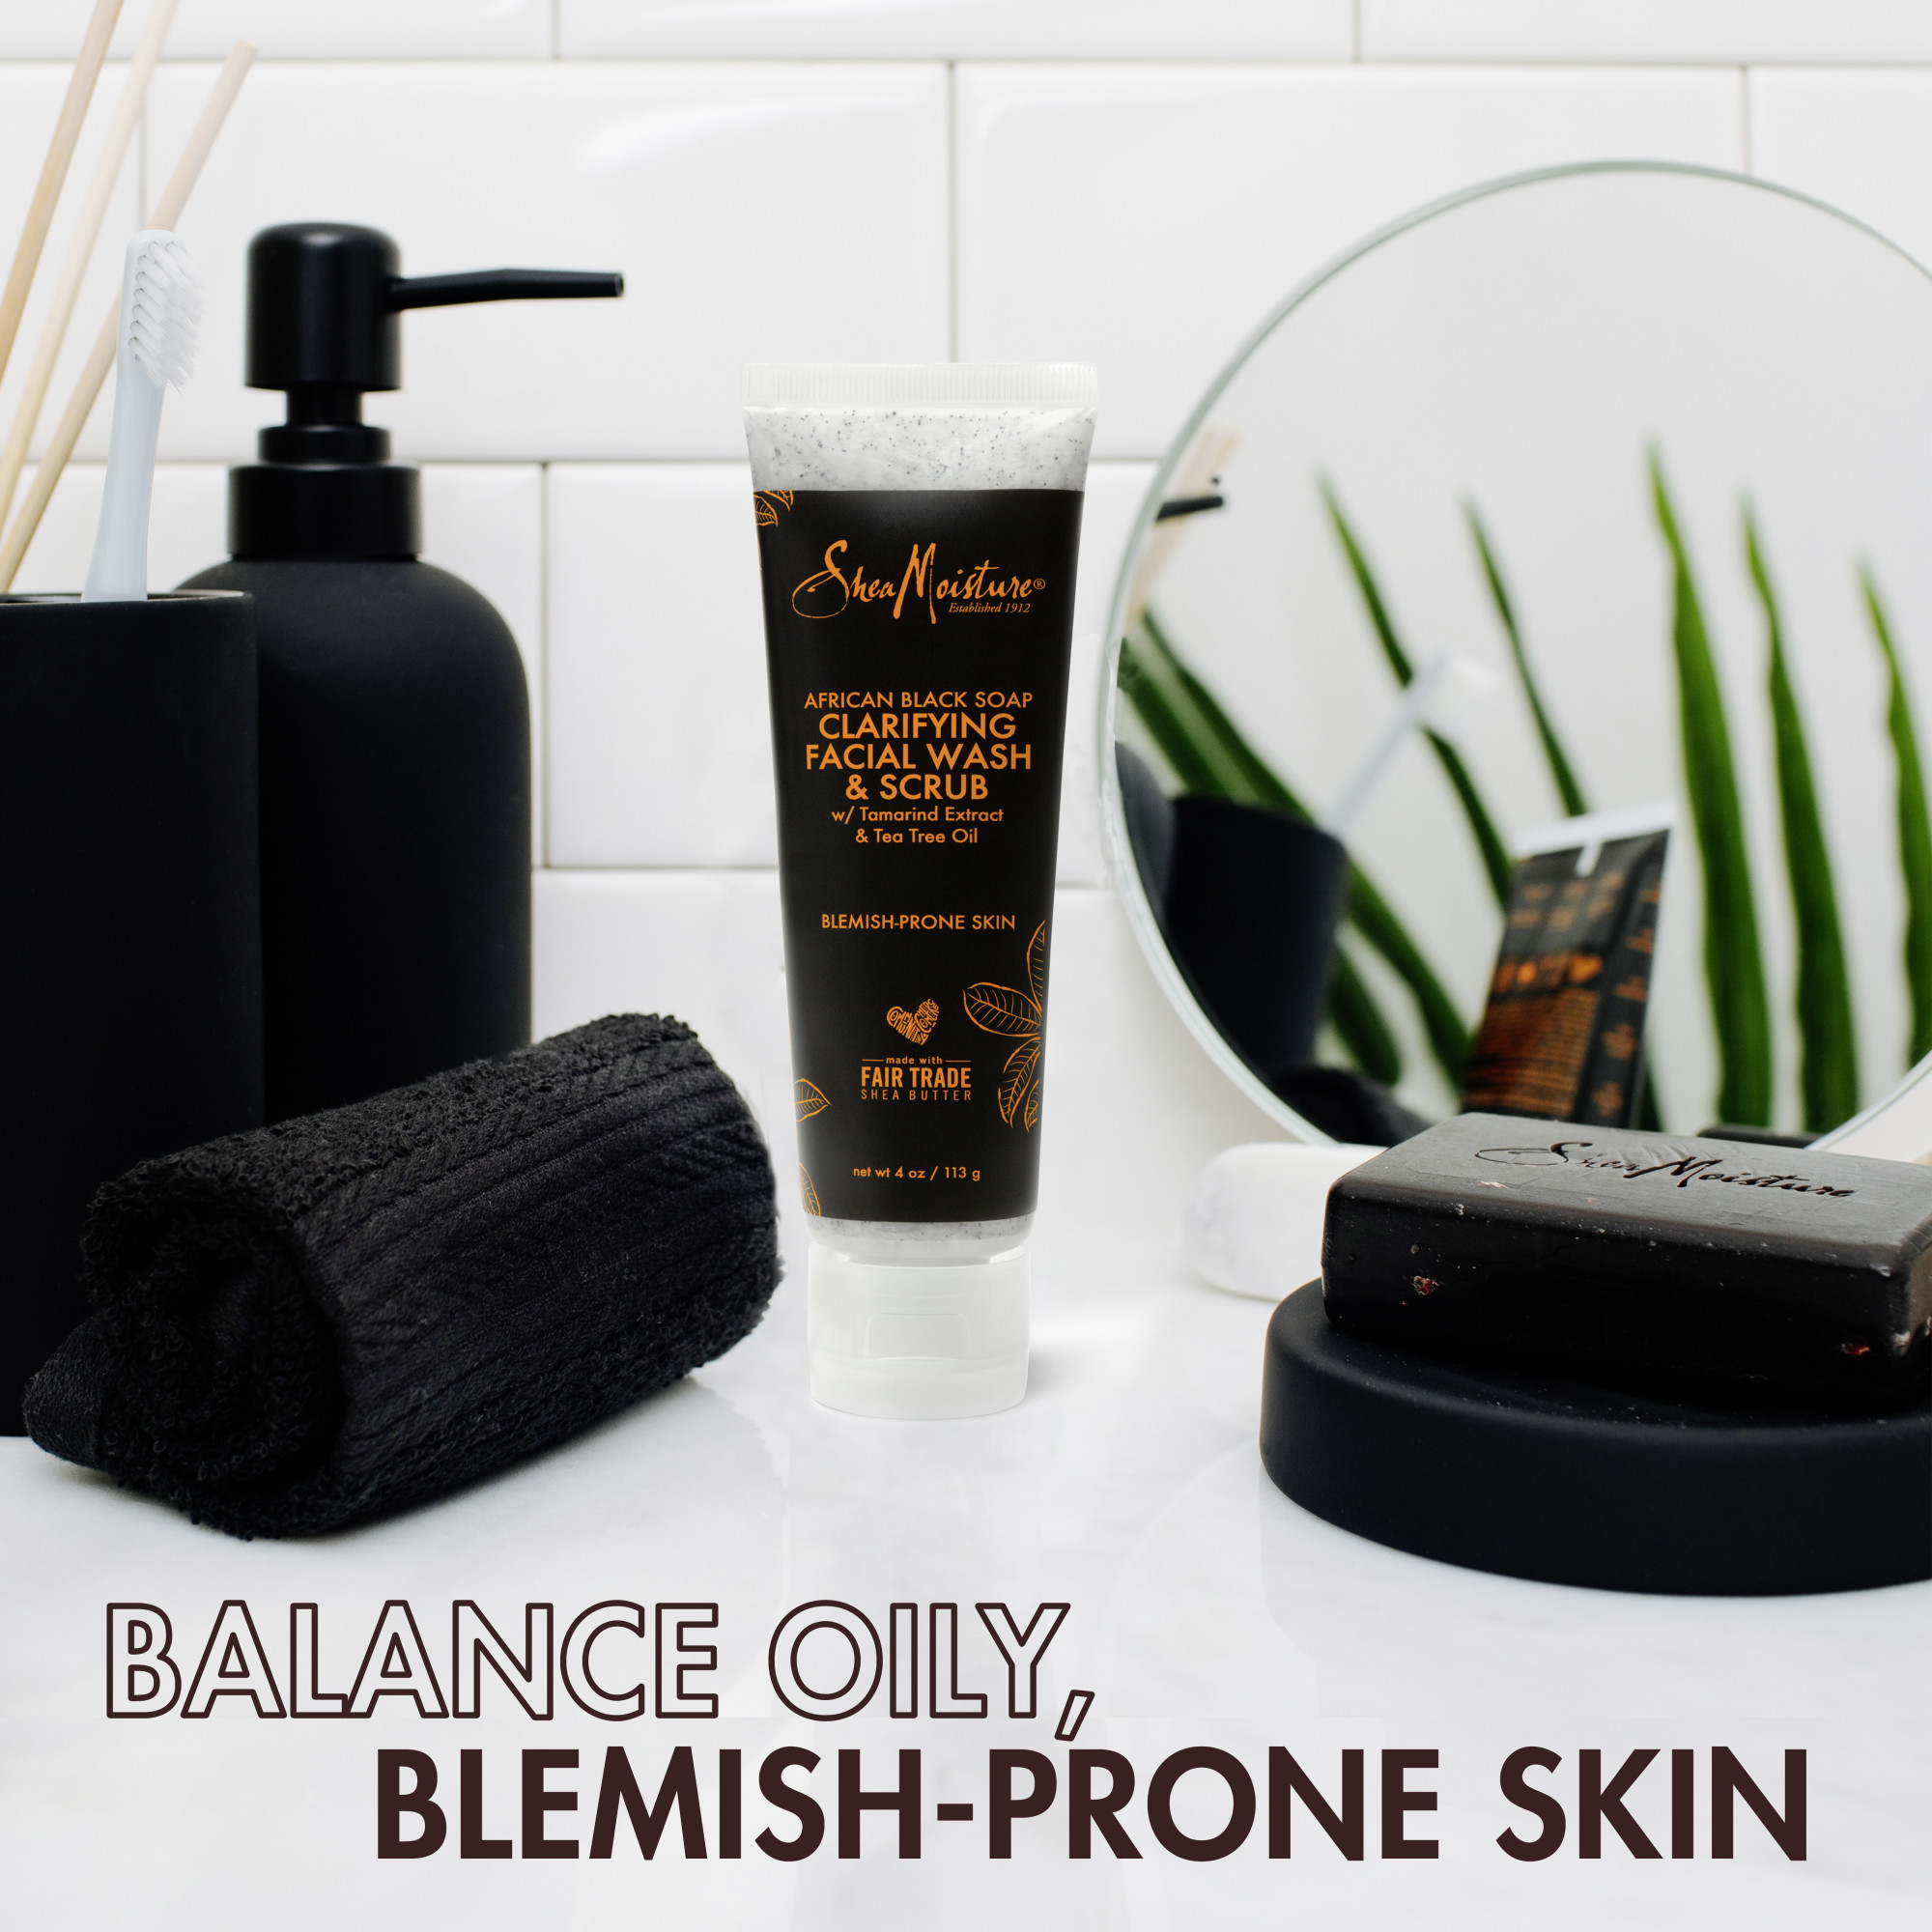 SheaMoisture African Black Soap Clarifying Facial Wash & Scrub, 4 oz - image 2 of 12